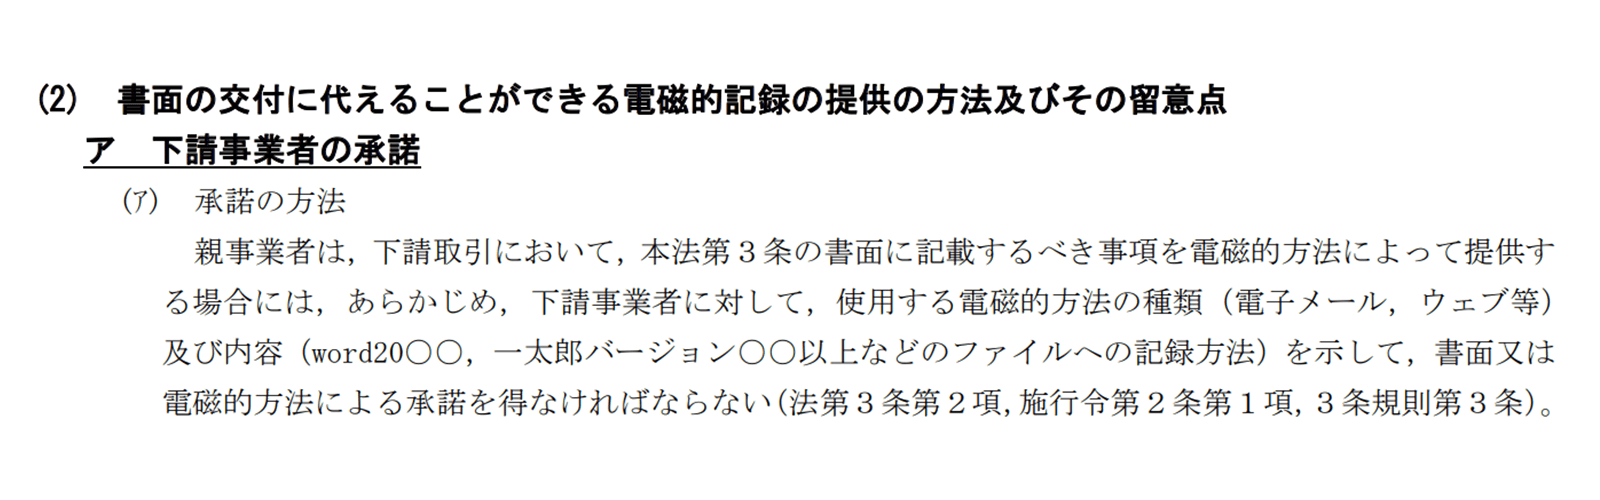 https://www.jftc.go.jp/houdou/panfu_files/R1textbook.pdf 2019年11月5日最終アクセス